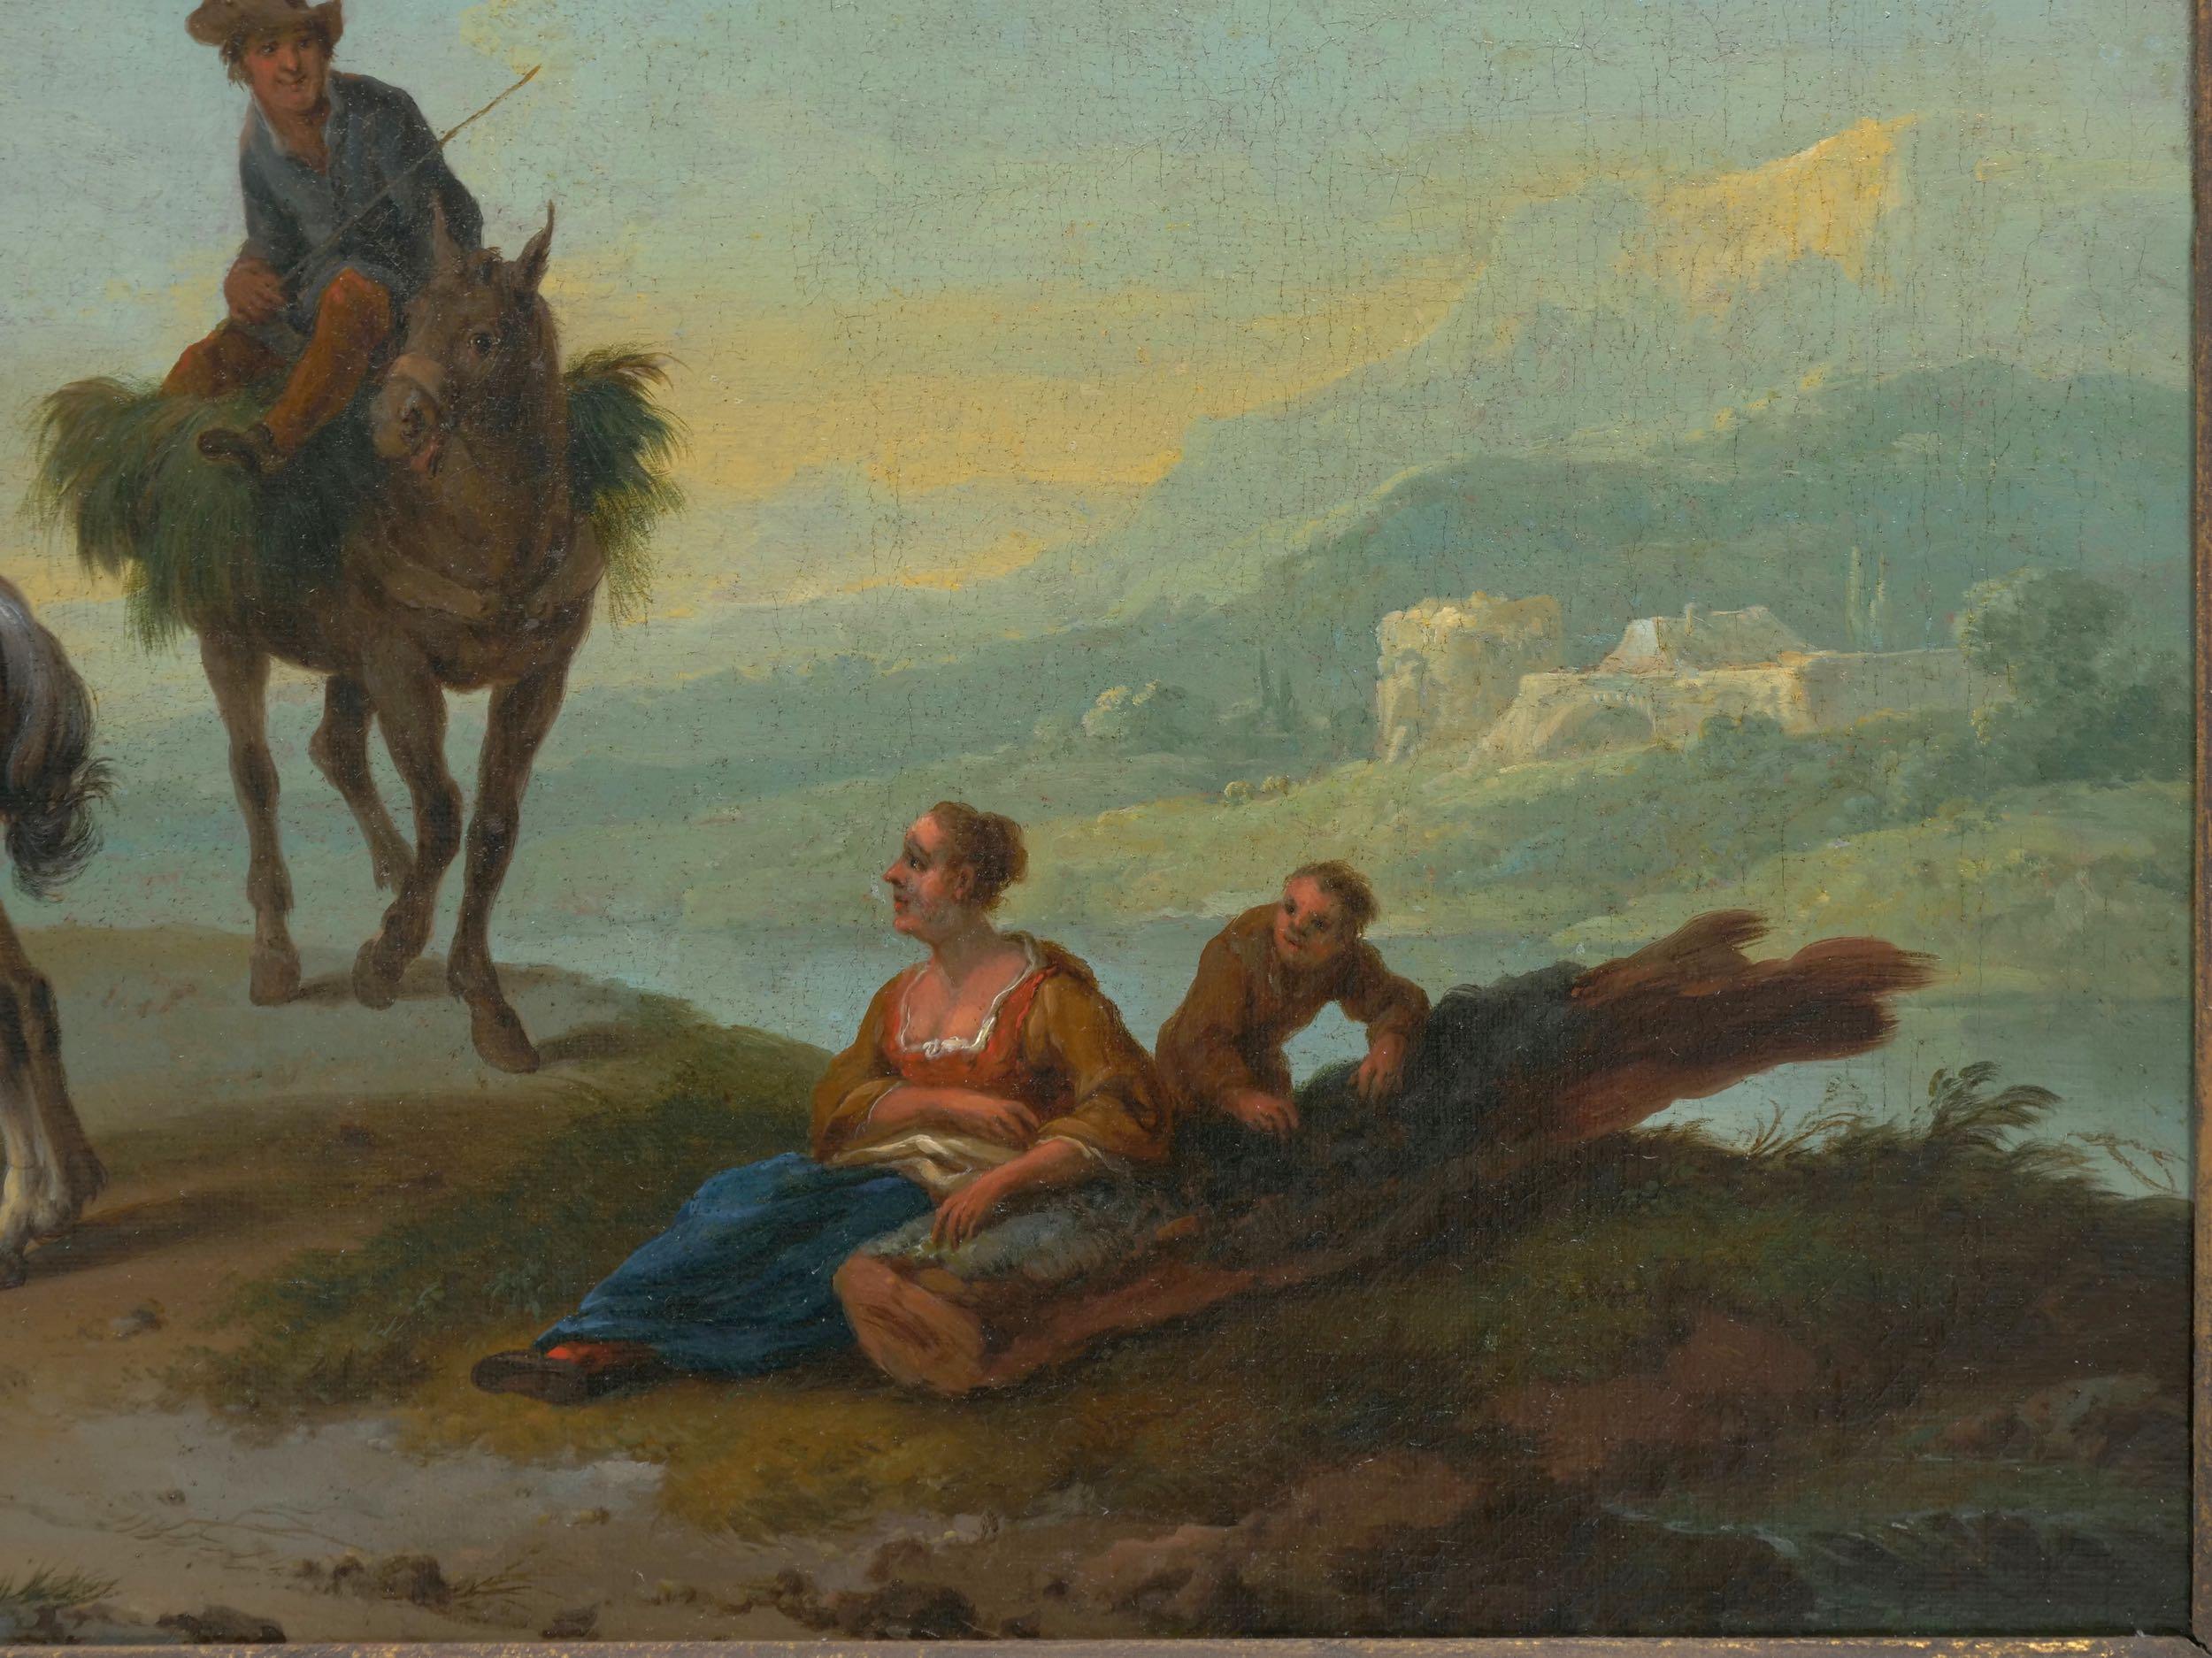 Antique Landscape Paintings Attributed to Pieter van Bloemen, 18th Century, Pair For Sale 1